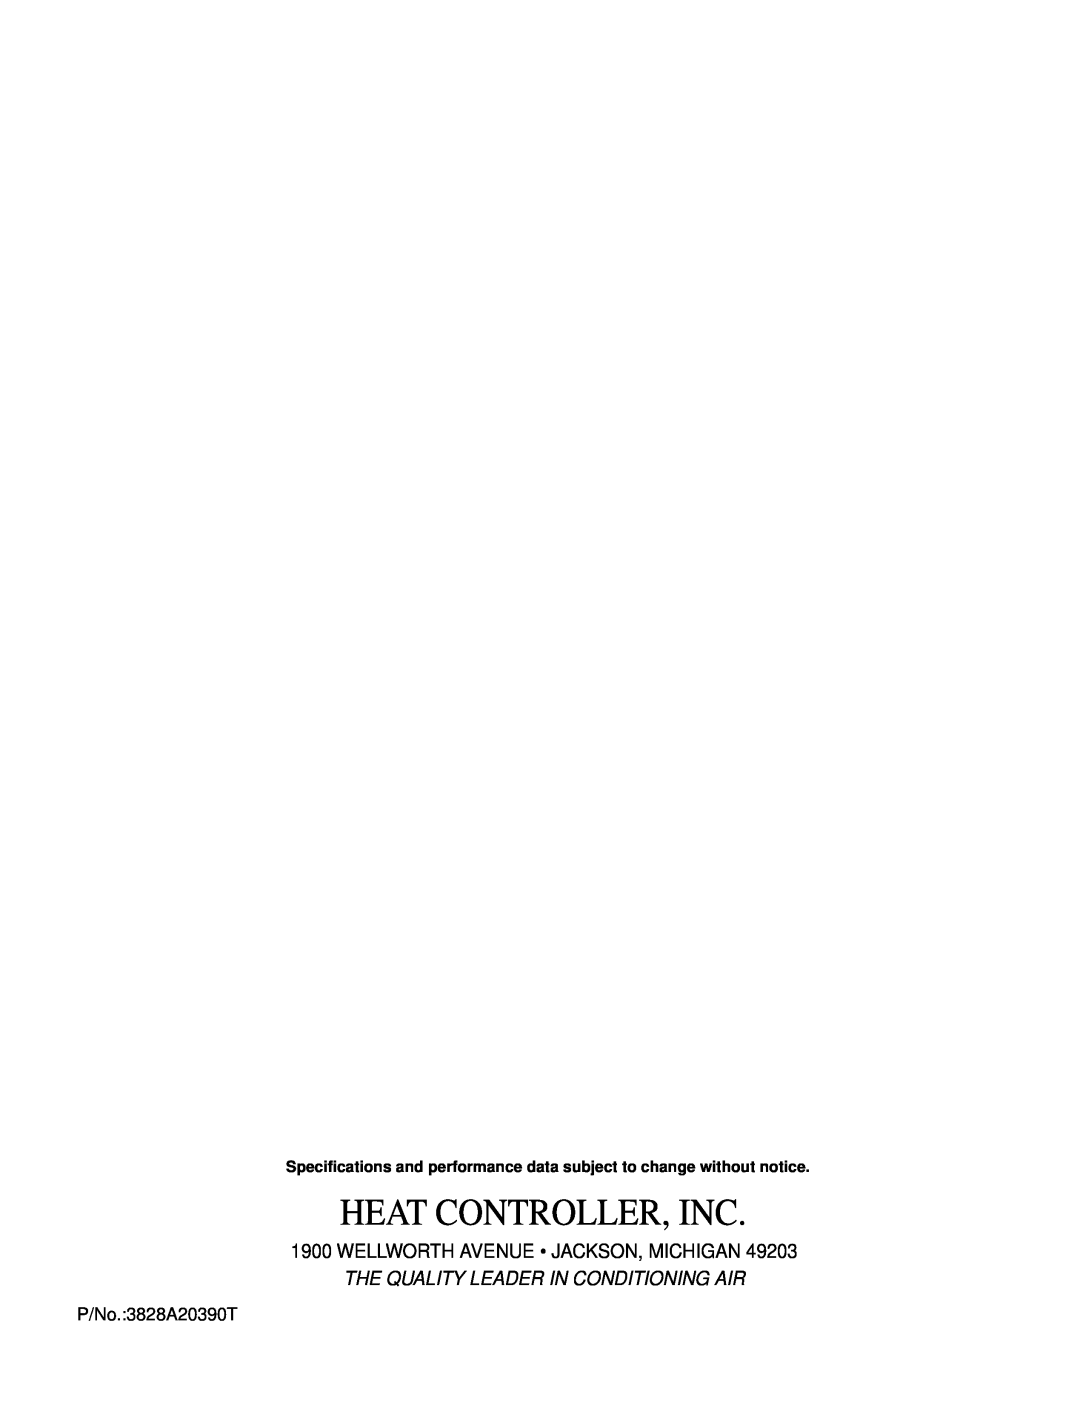 Heat Controller DMC12SB-0 Heat Controller, Inc, Wellworth Avenue Jackson, Michigan, The Quality Leader In Conditioning Air 